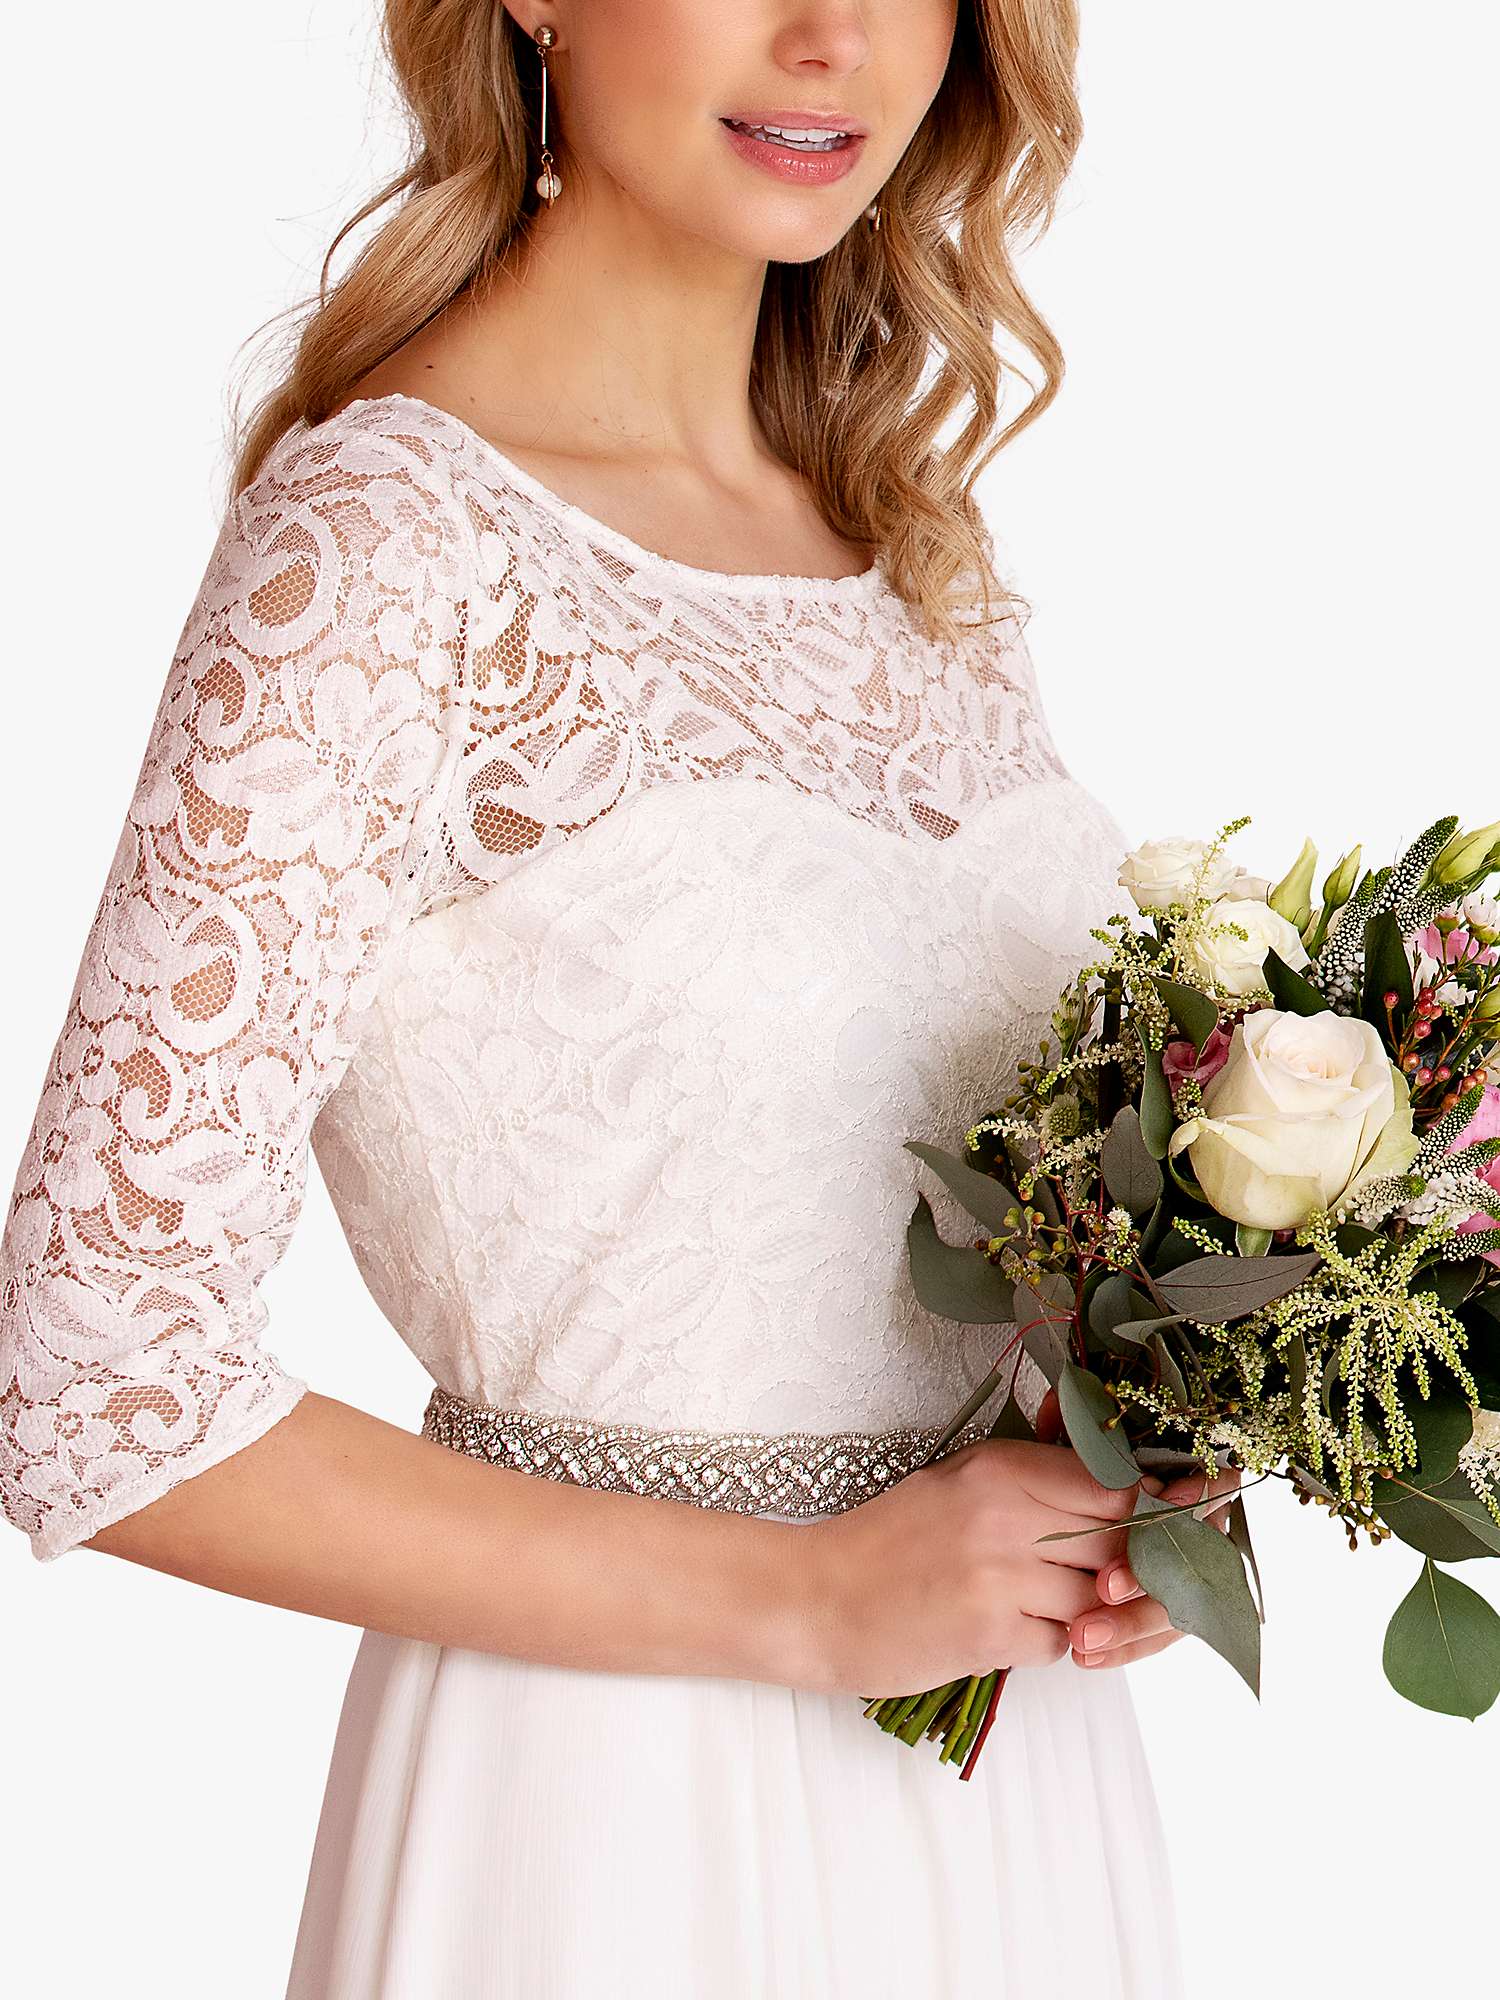 Buy Alie Street Opal Silk Wedding Gown, Ivory Online at johnlewis.com